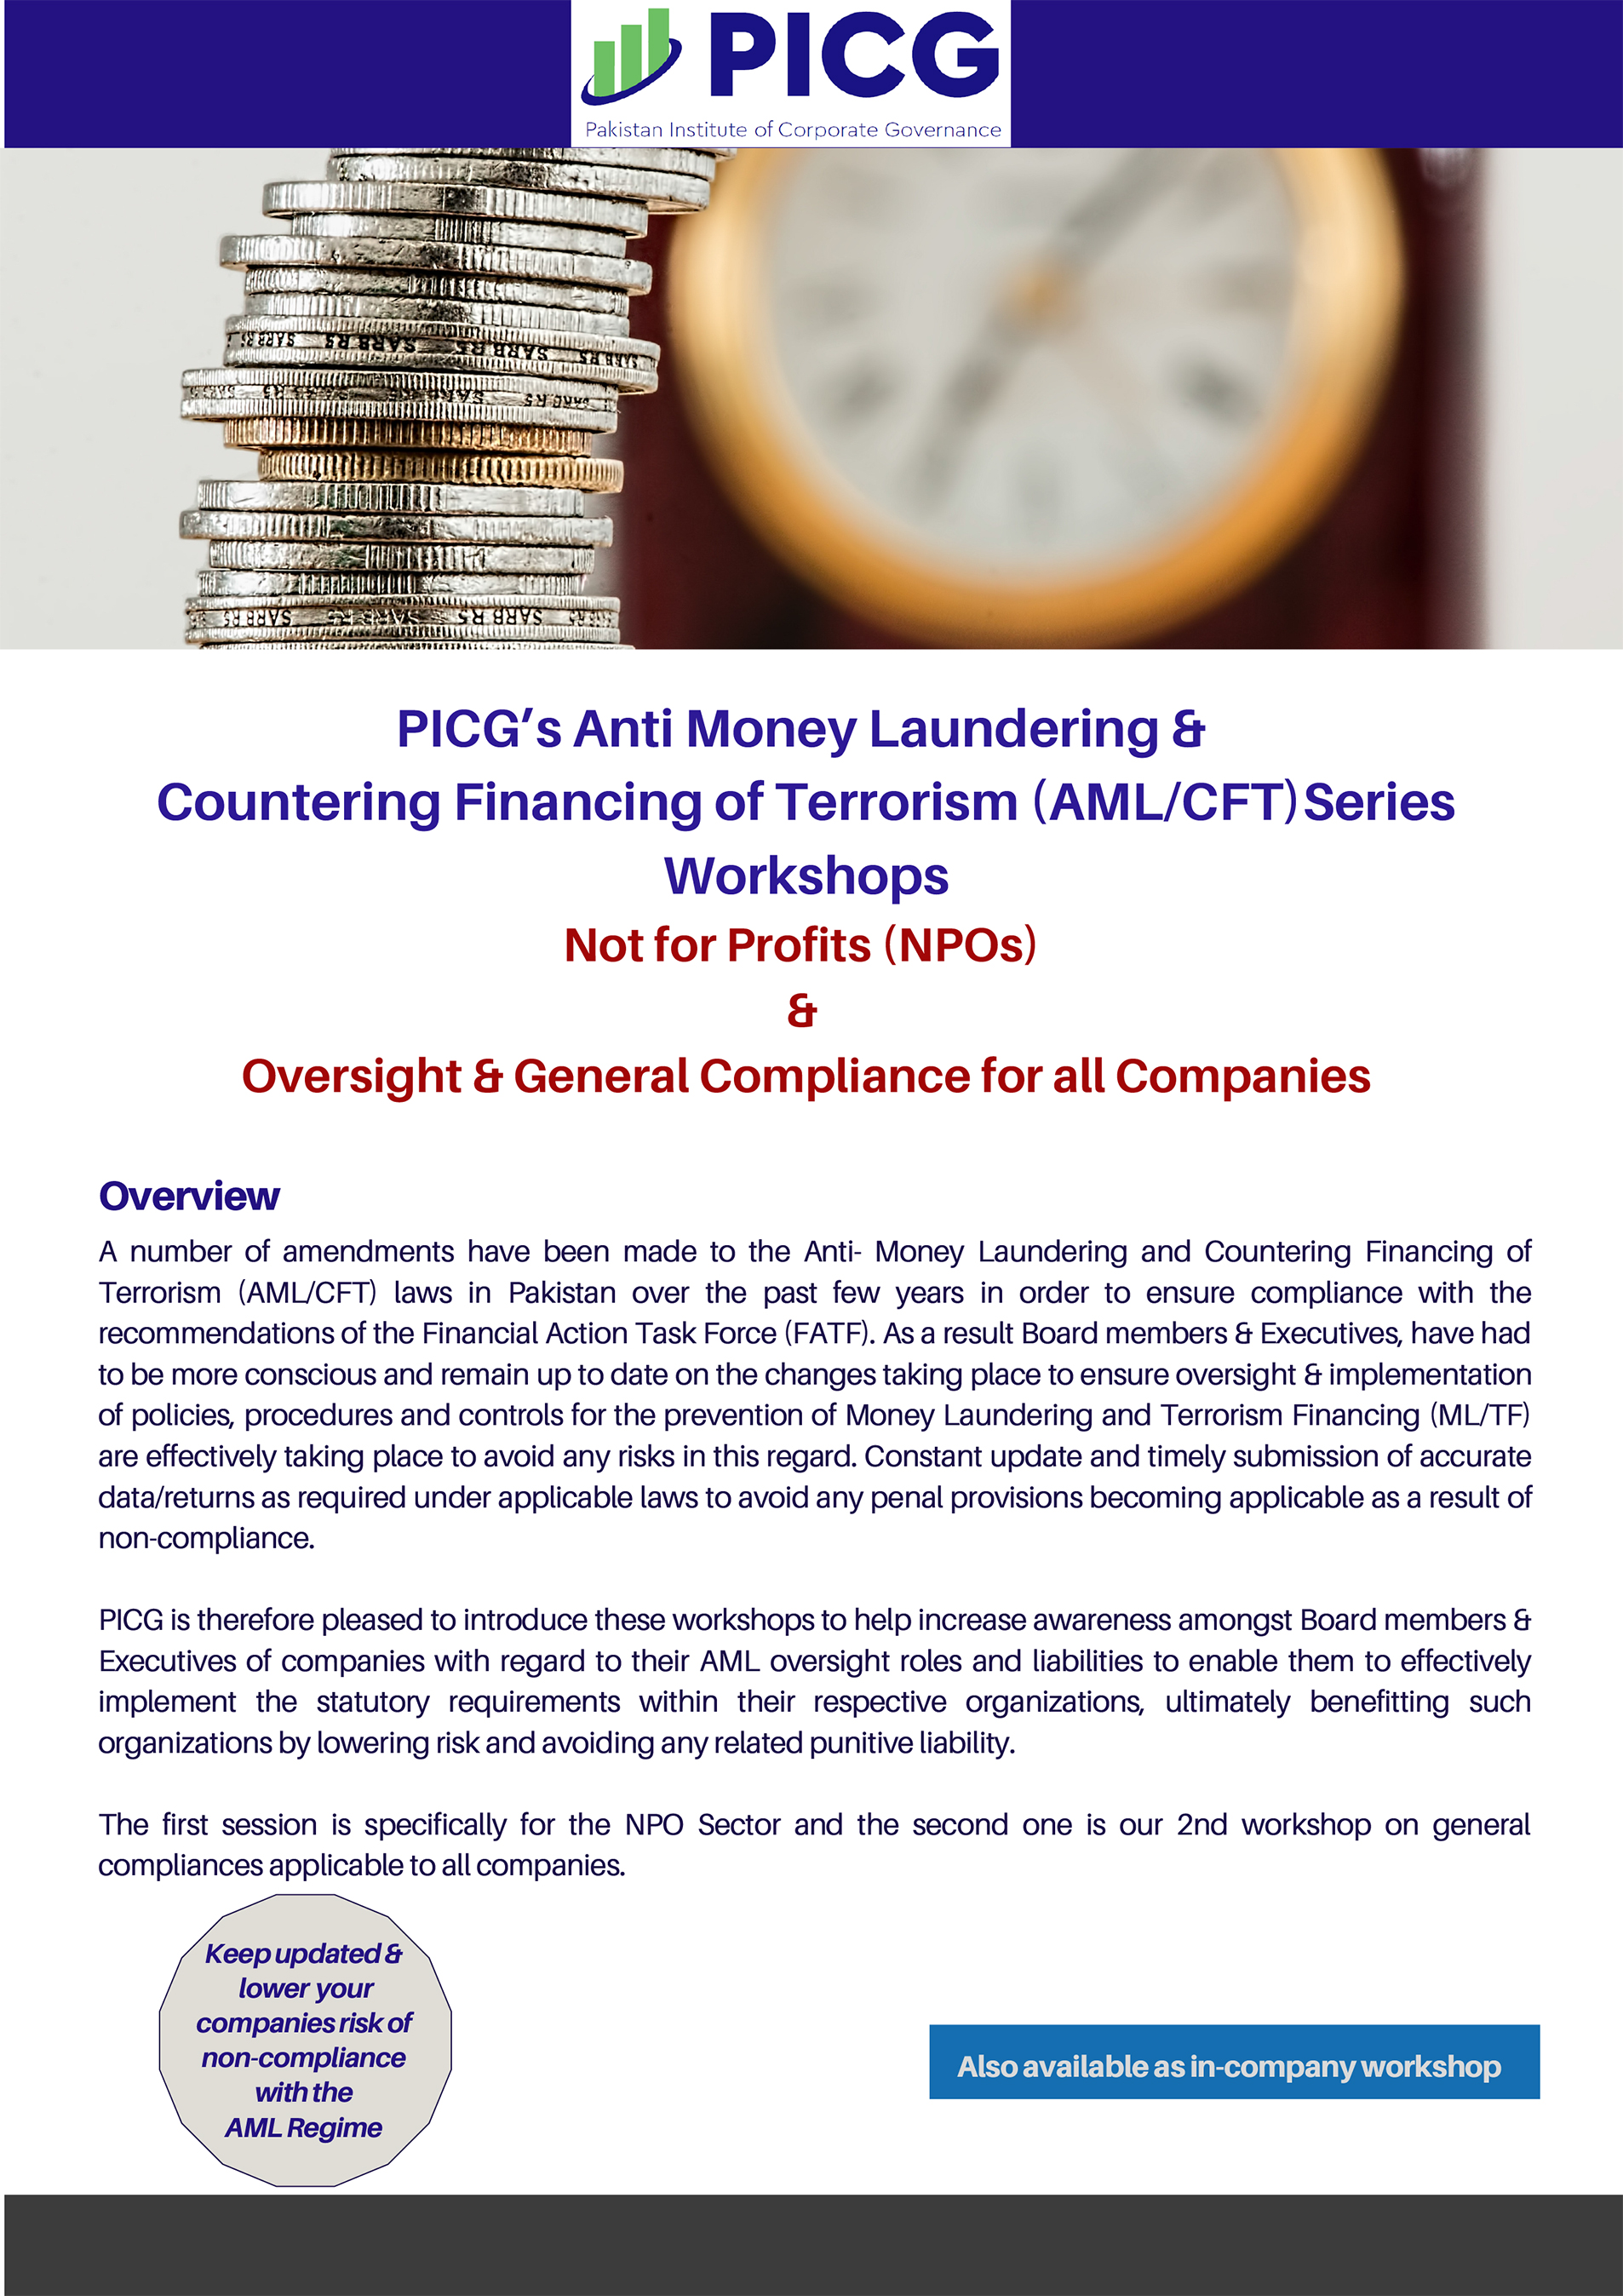 Anti Money Laundering & Countering Financing of Terrorism Series Workshops